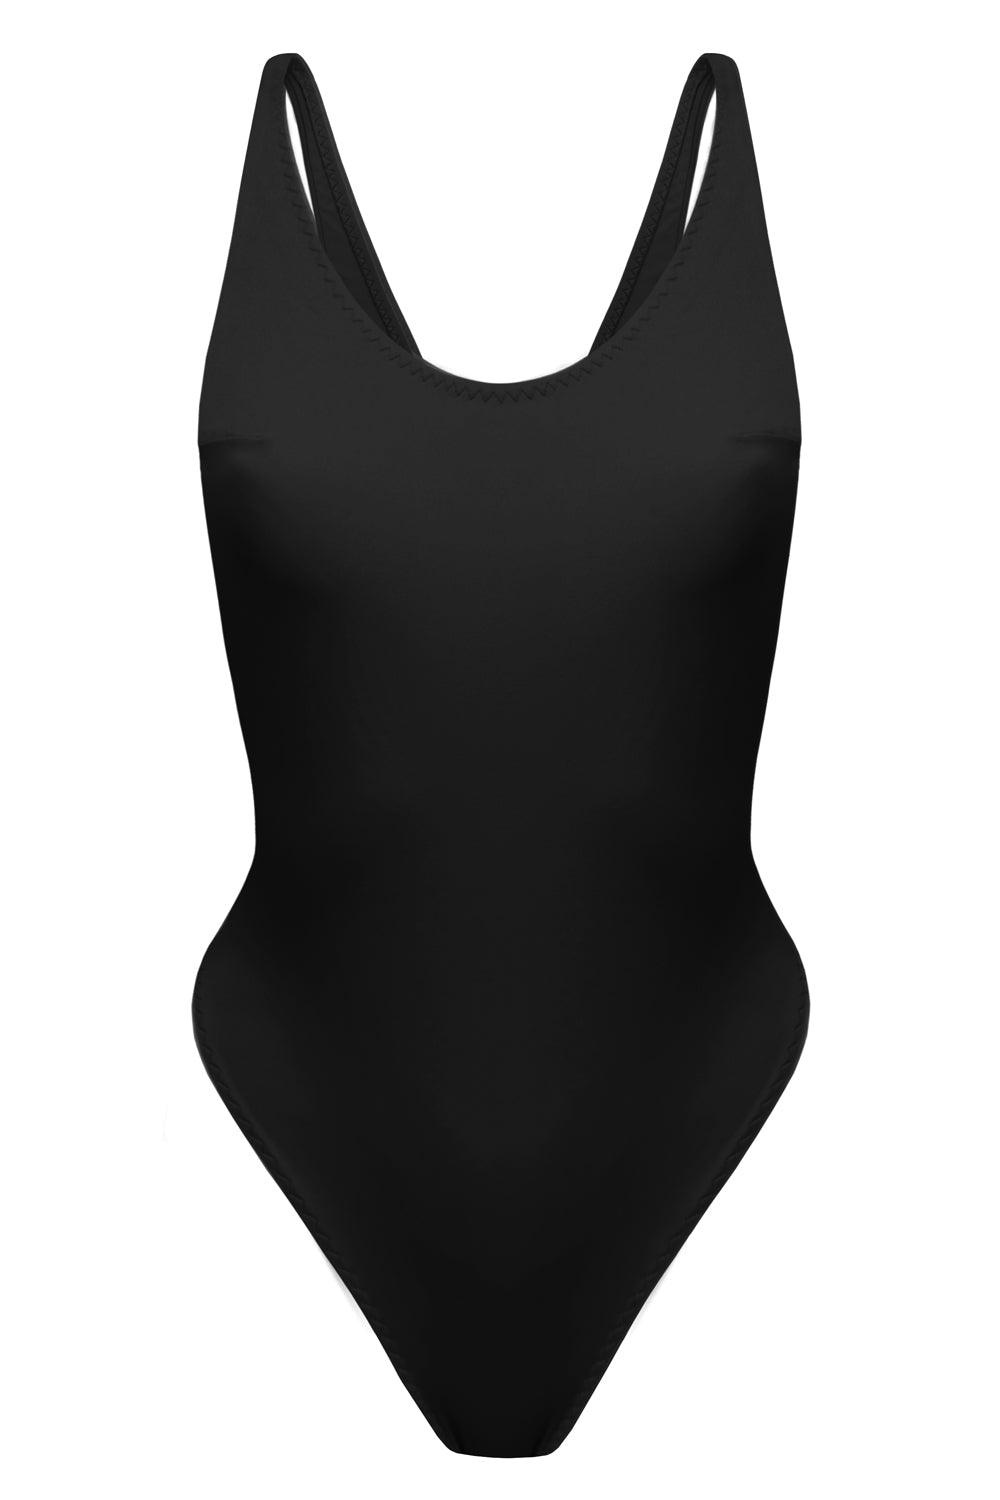 Mediana Black swimsuit - One Piece swimsuit by yesUndress. Shop on yesUndress